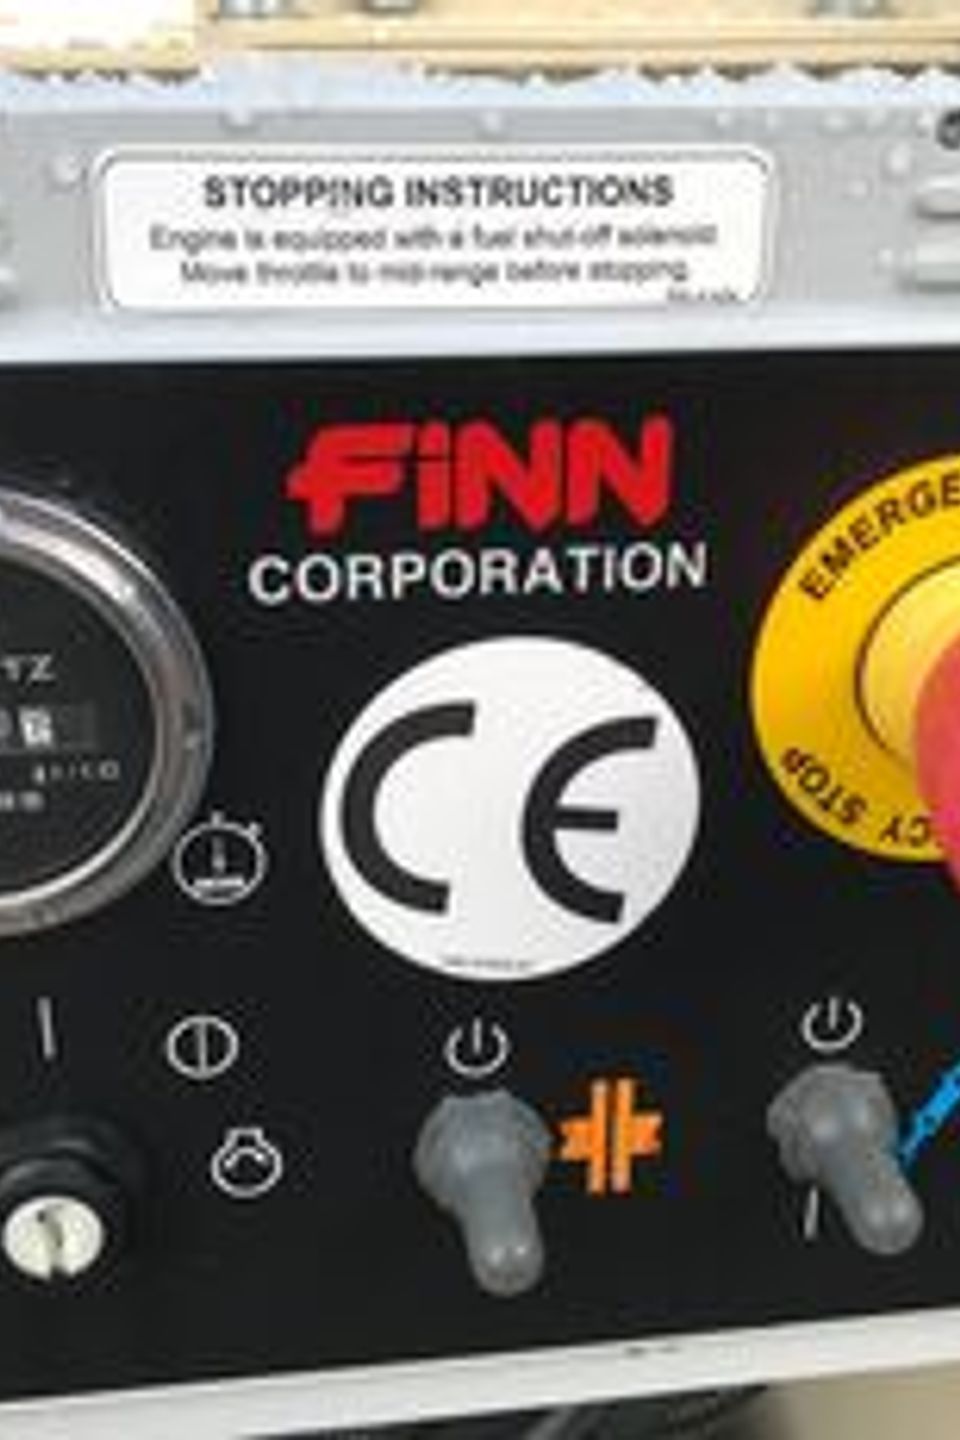 Control panel overlay image